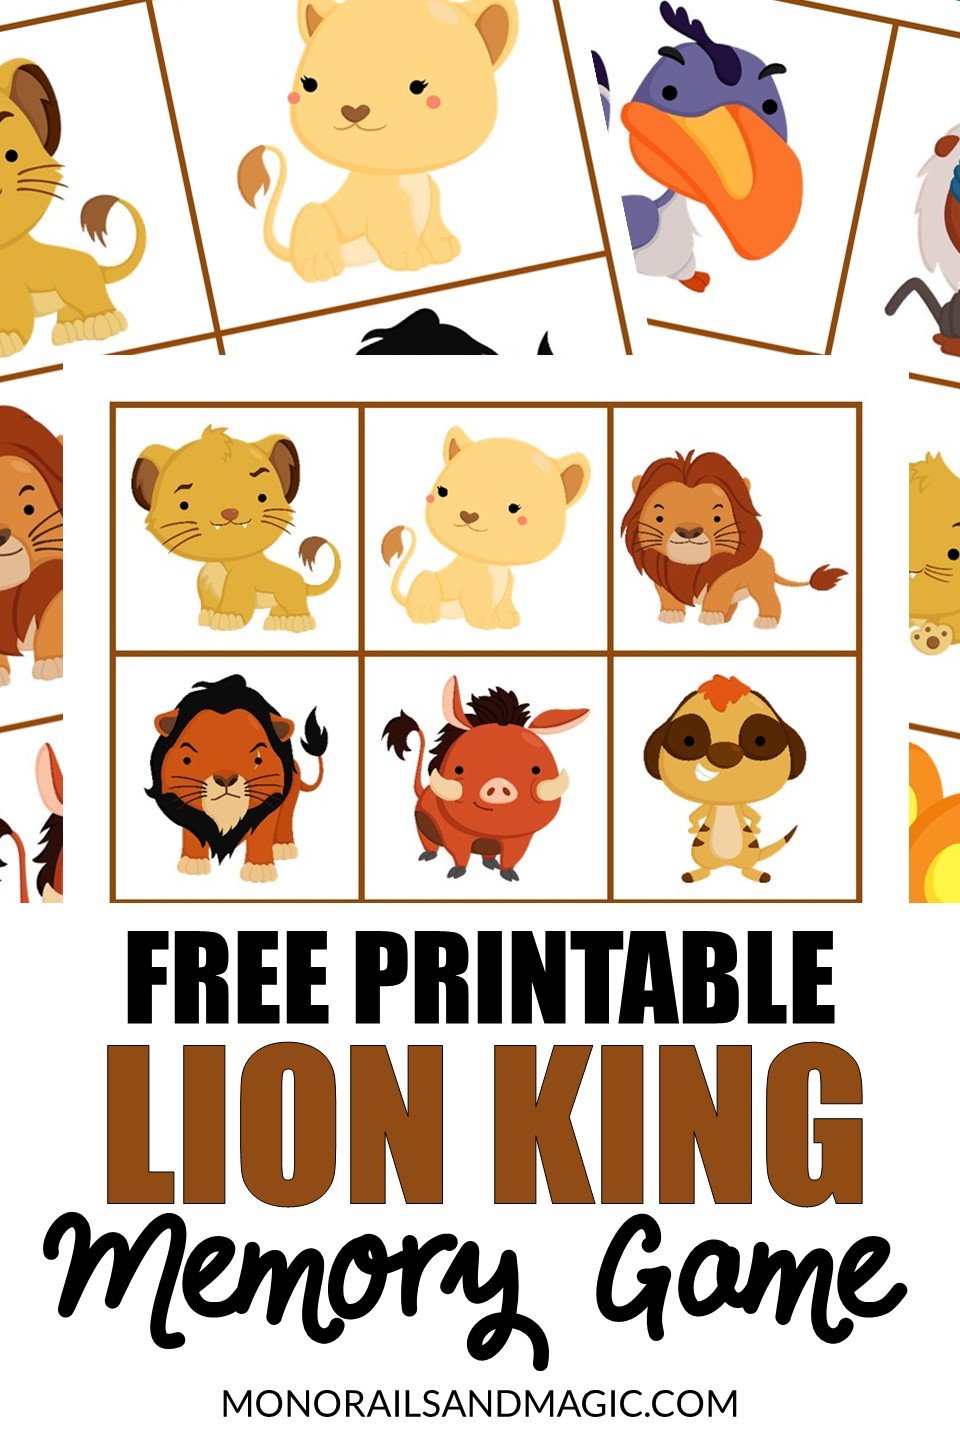 Free printable Lion King memory game for kids.